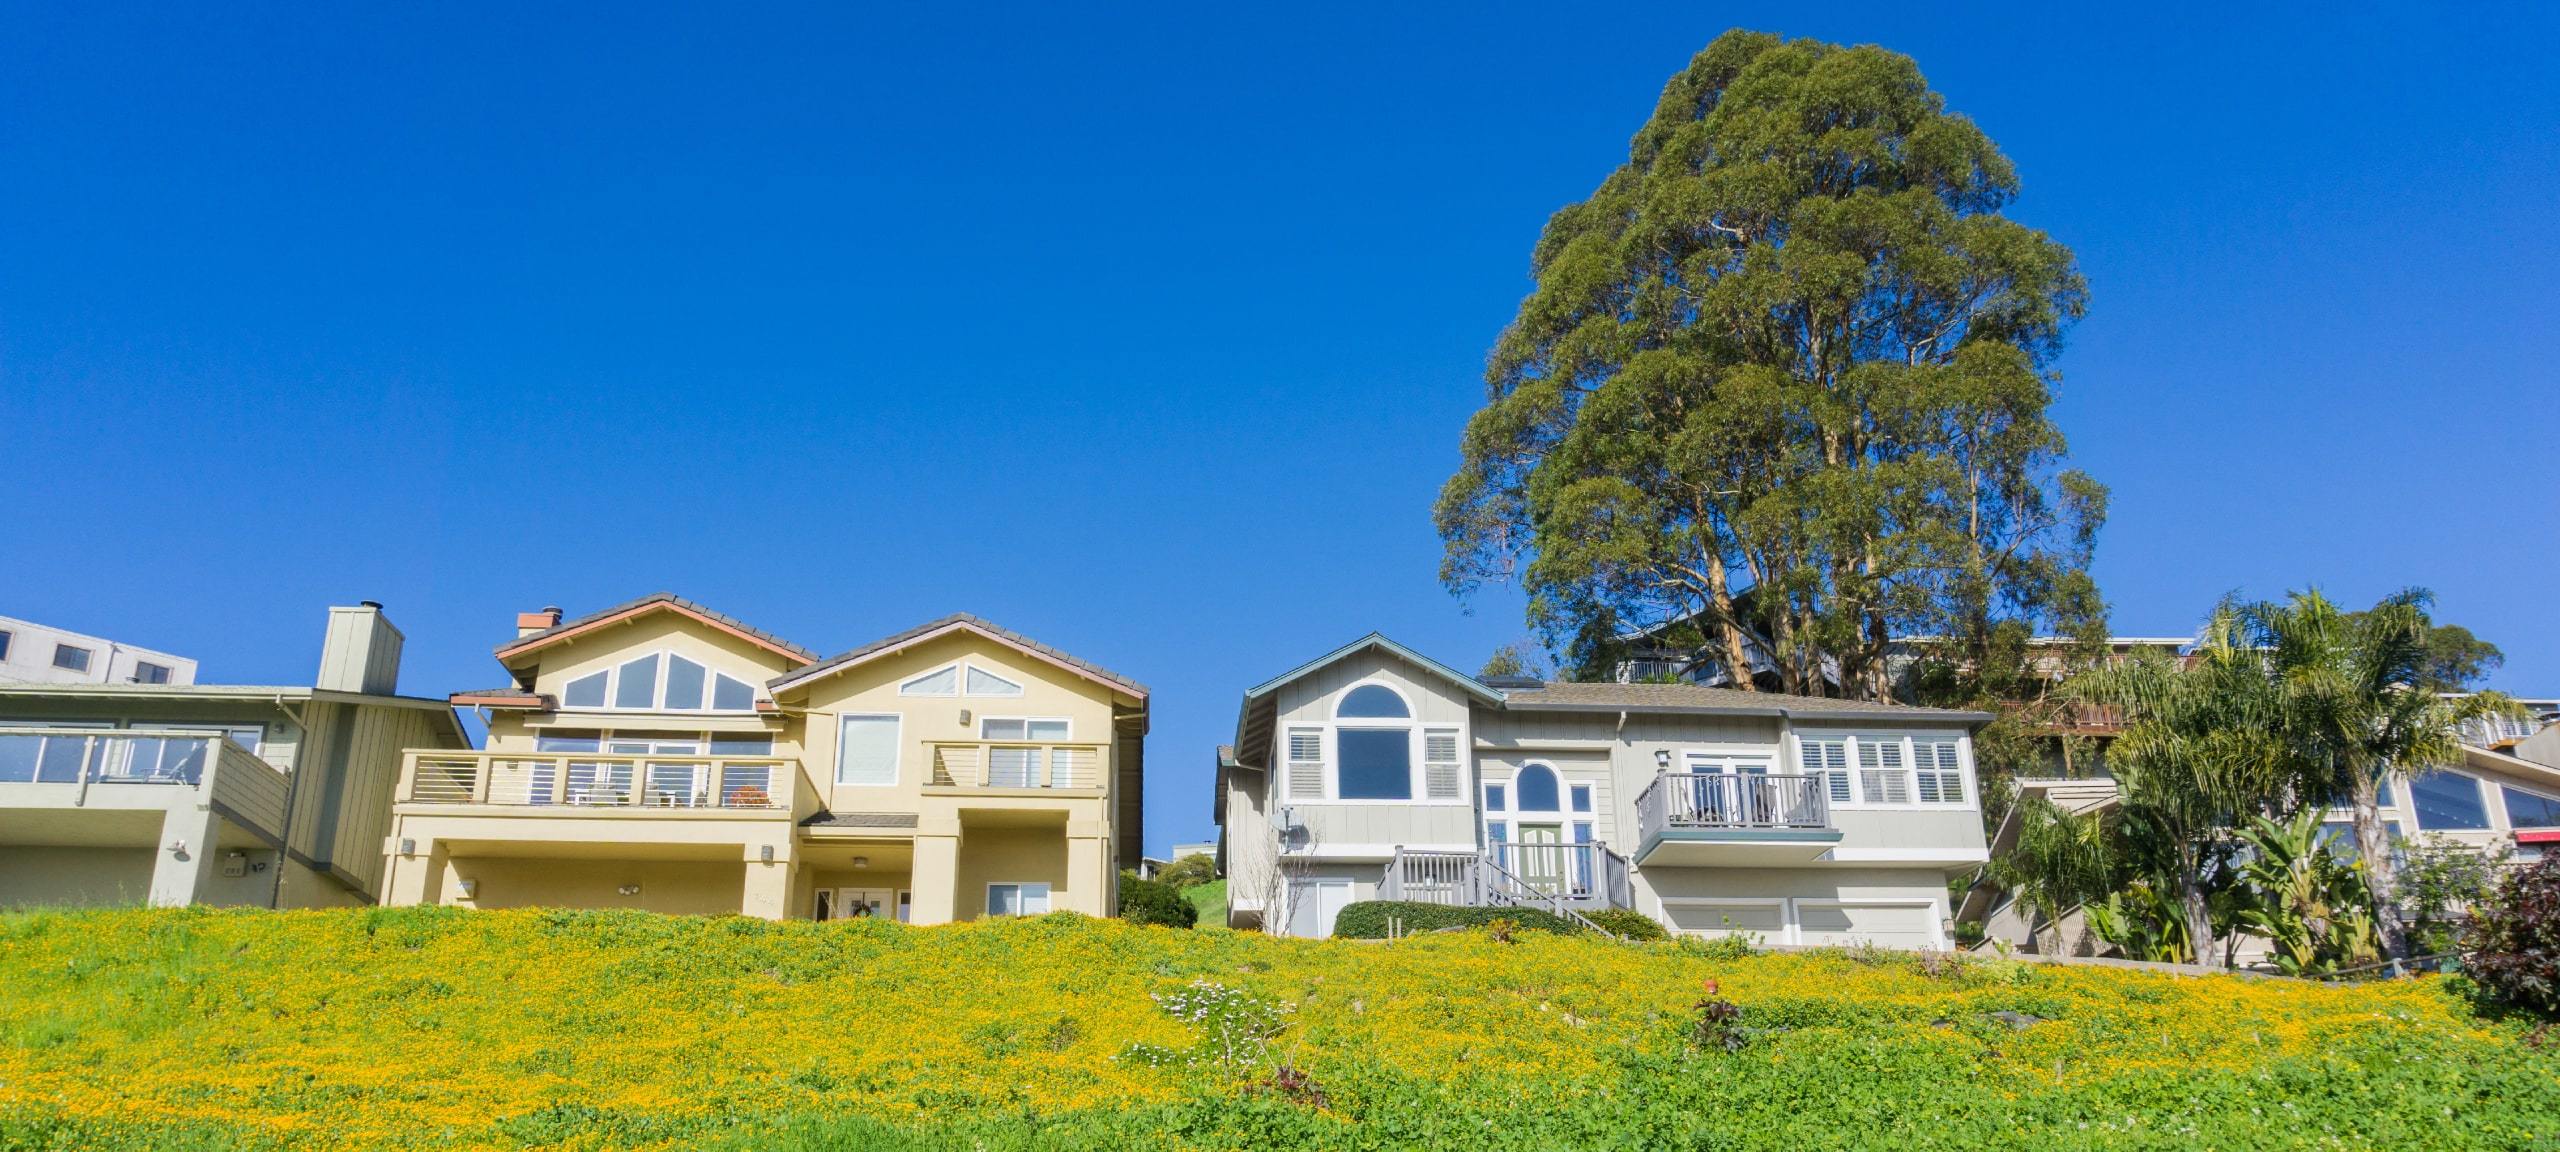 Sunny view of homes on hill in Santa Cruz, California